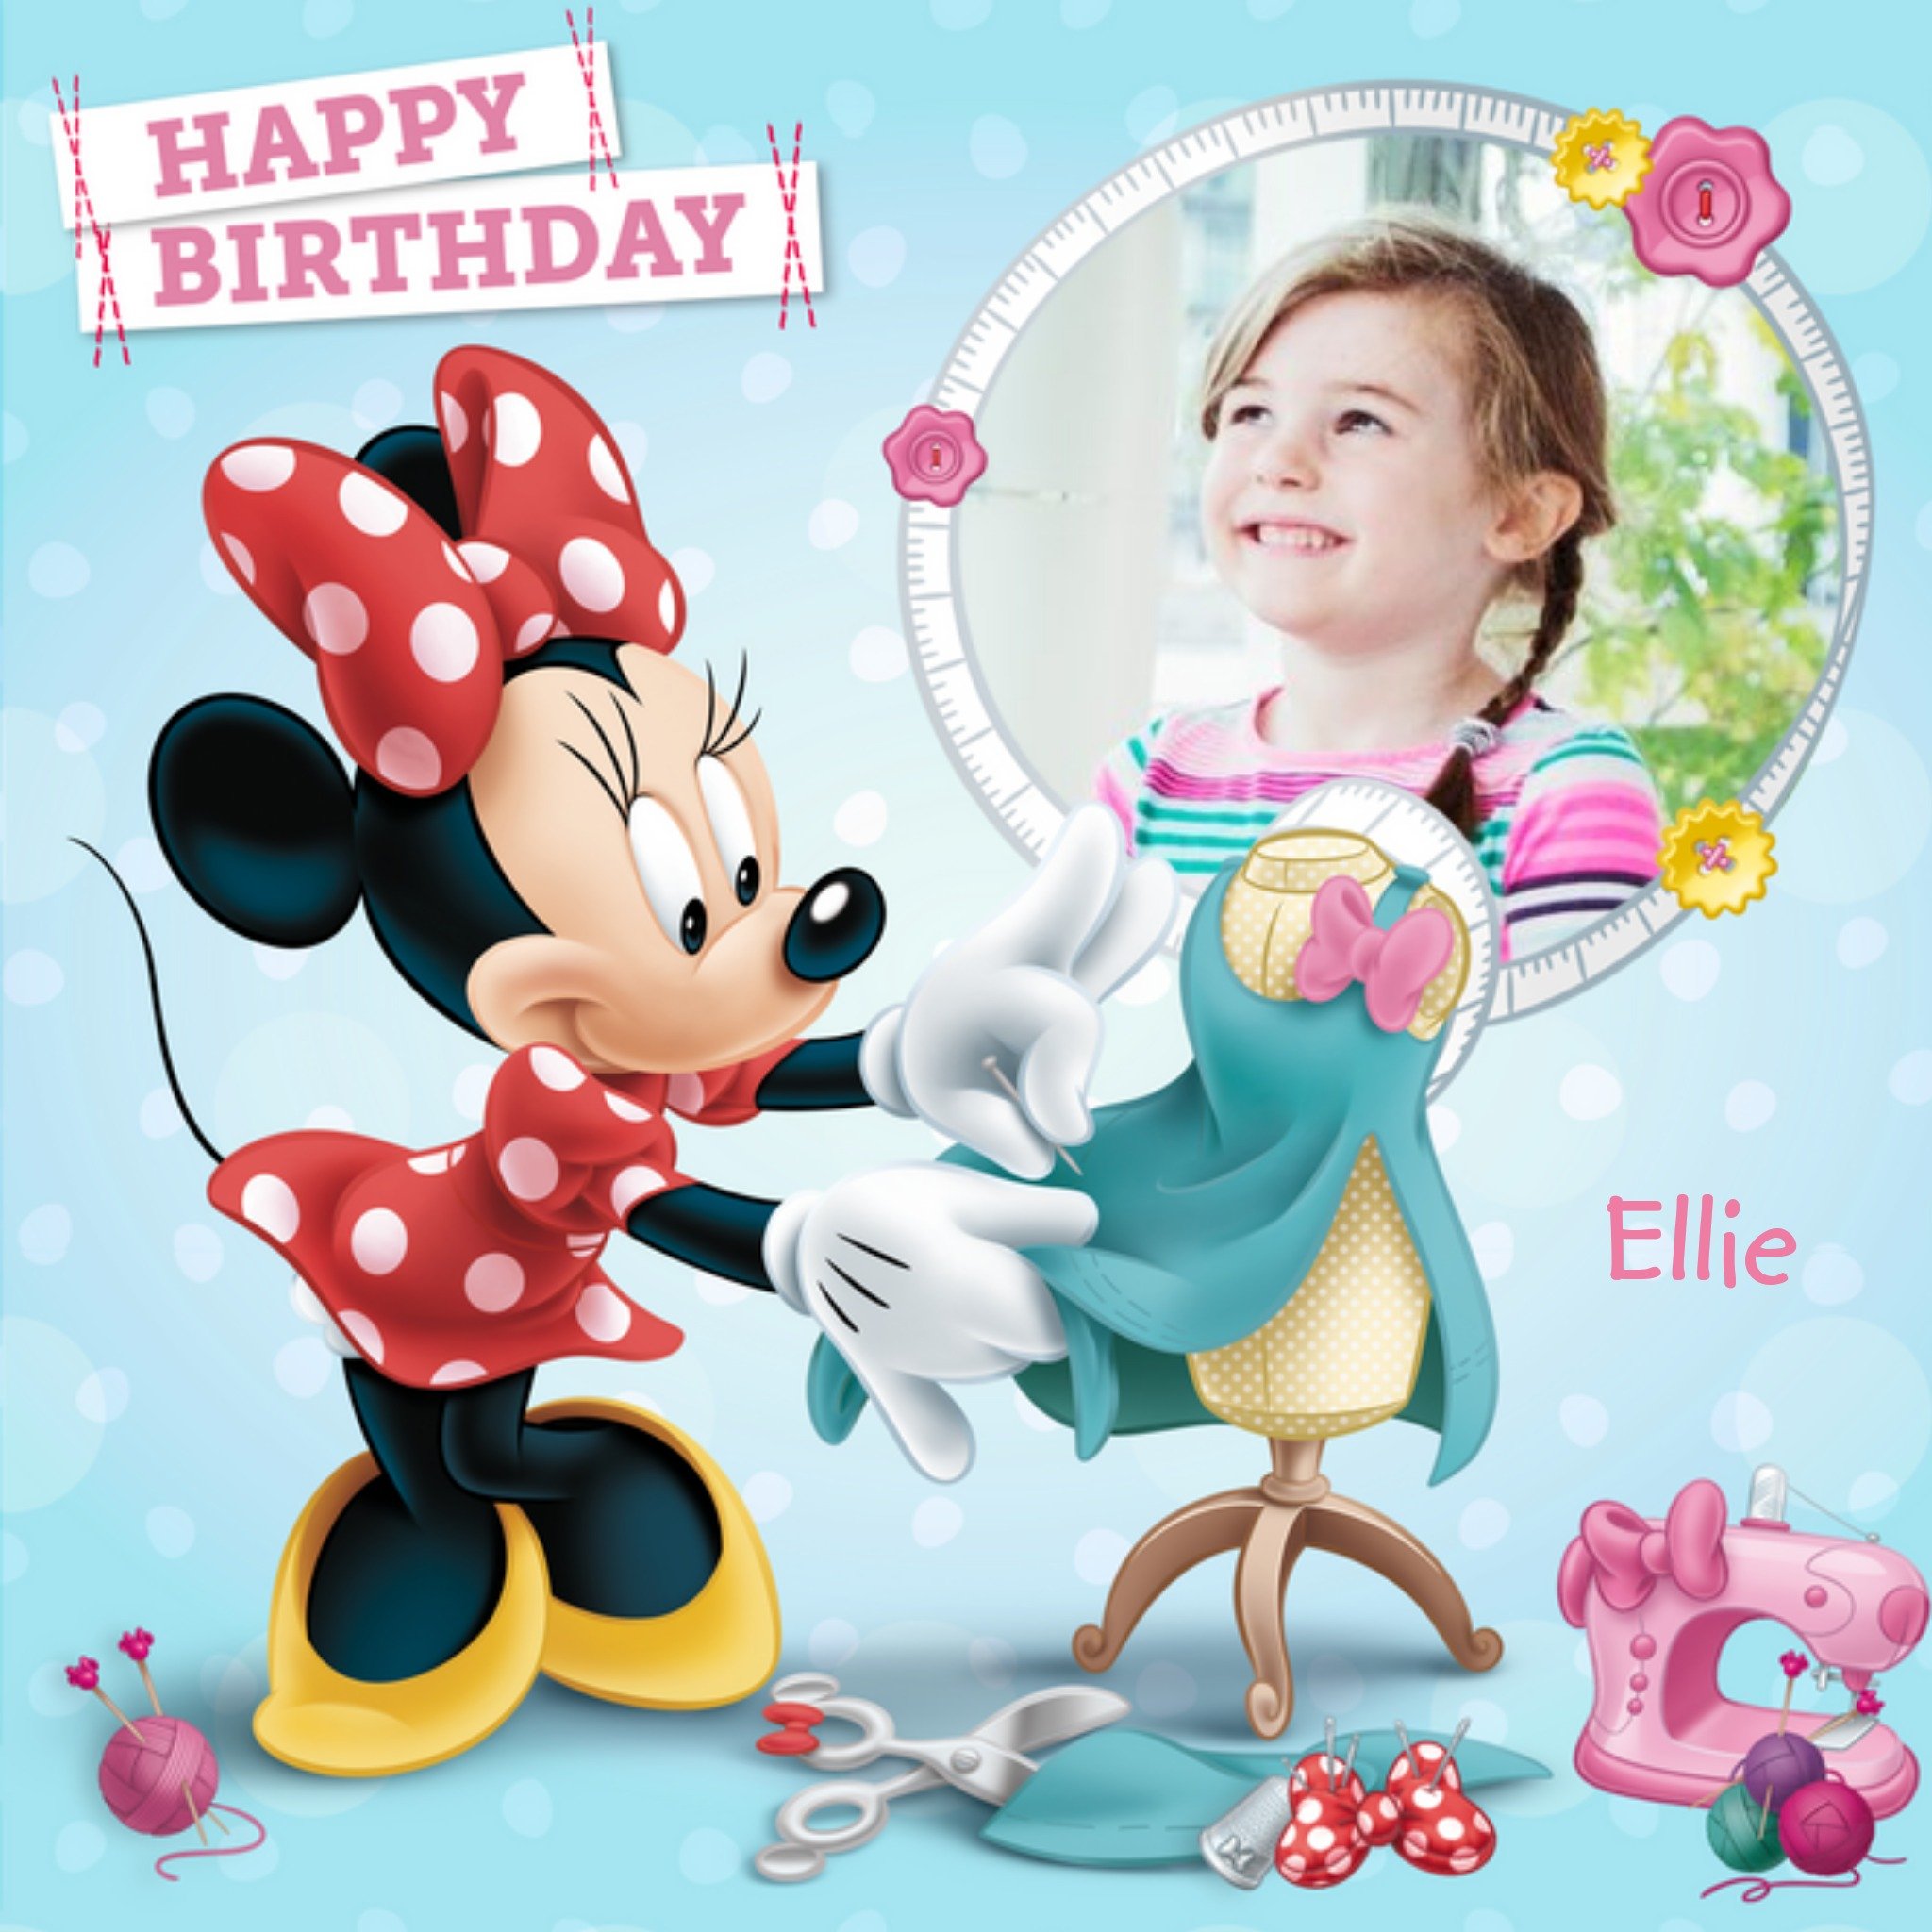 Disney Minnie Mouse Photo Happy Birthday Card, Large